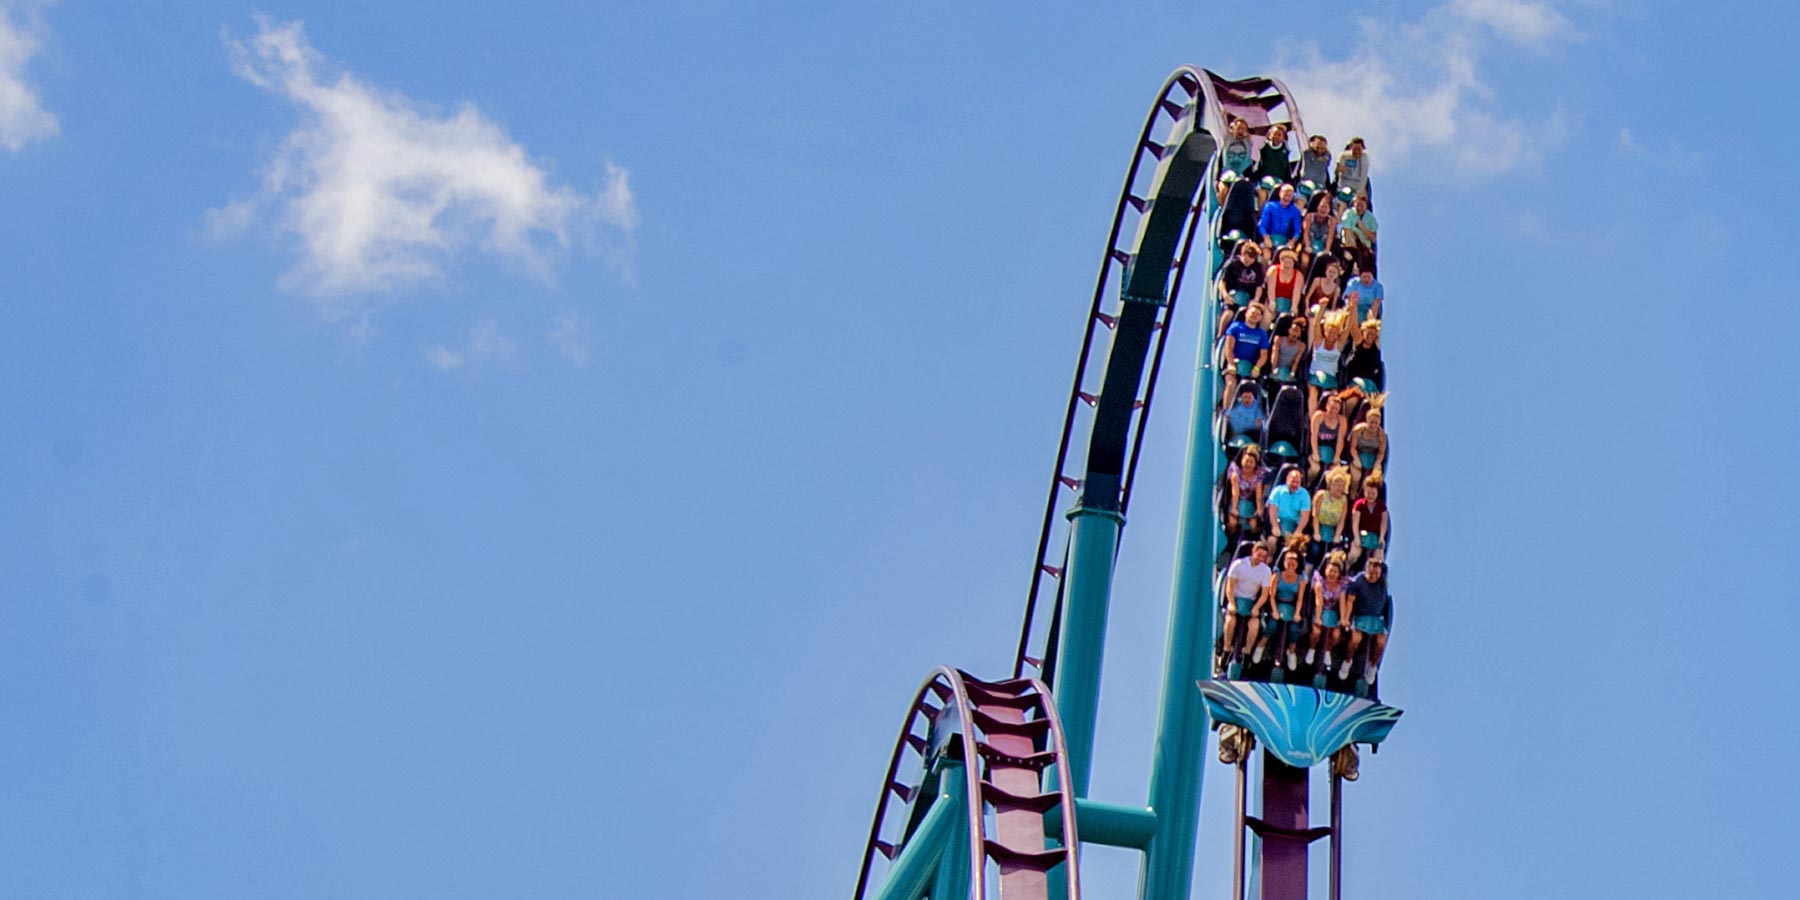 Mako roller coaster at SeaWorld Orlando